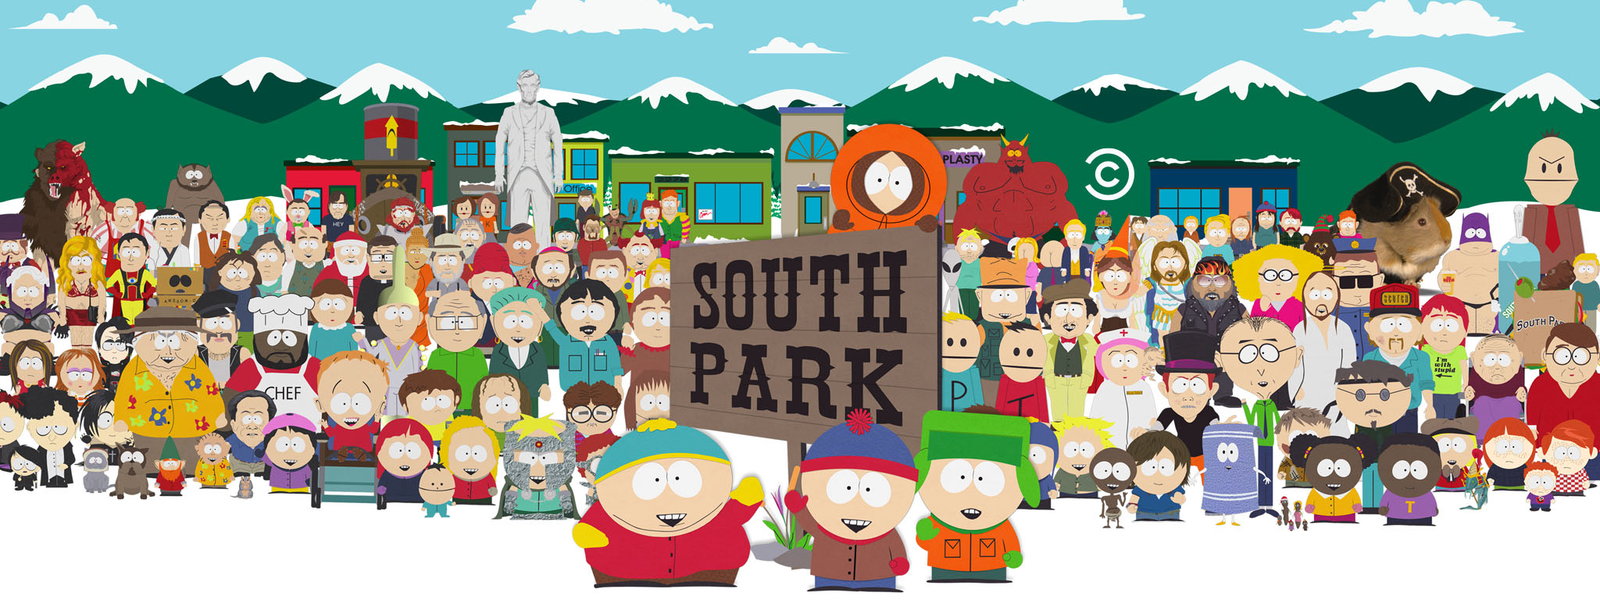 Probing South Park: View the Original Art From the Pilot Episode ~ L.A.  TACO, south park south park episode 